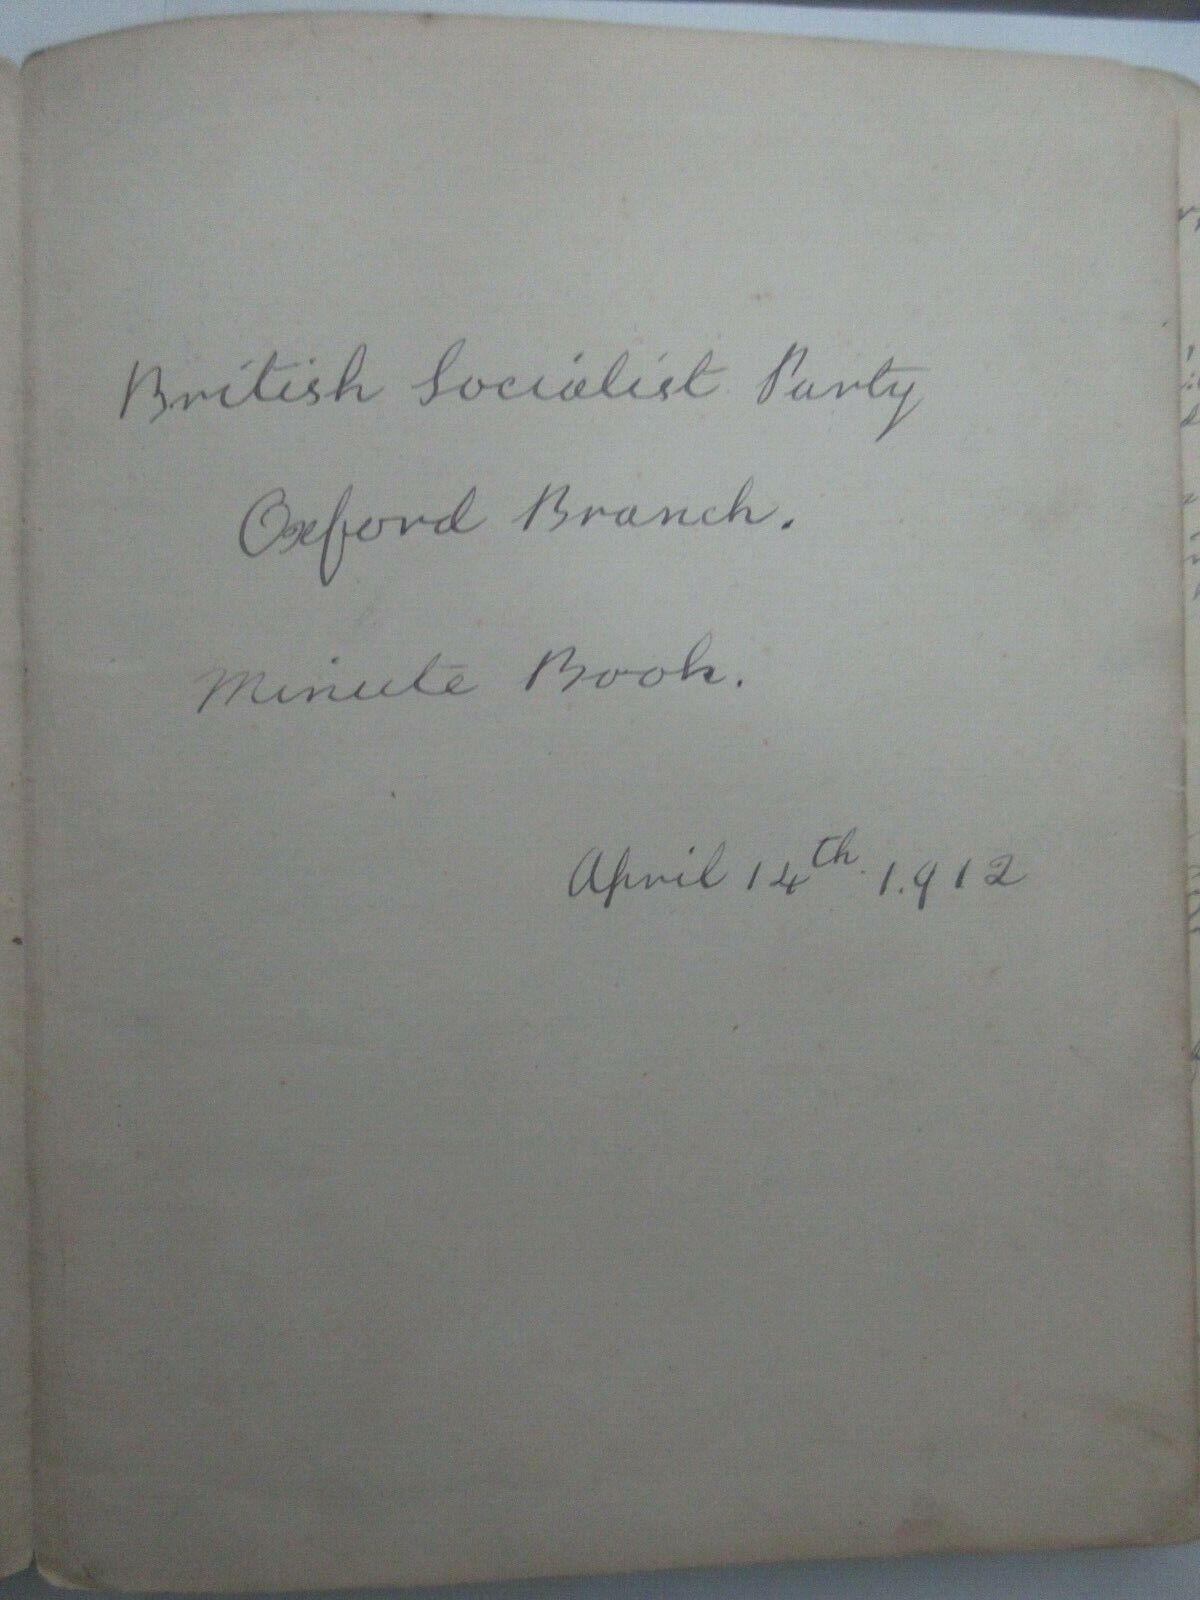 Judaica Antique Booklet Manuscript English British, Oxford Branch 1912-1914.